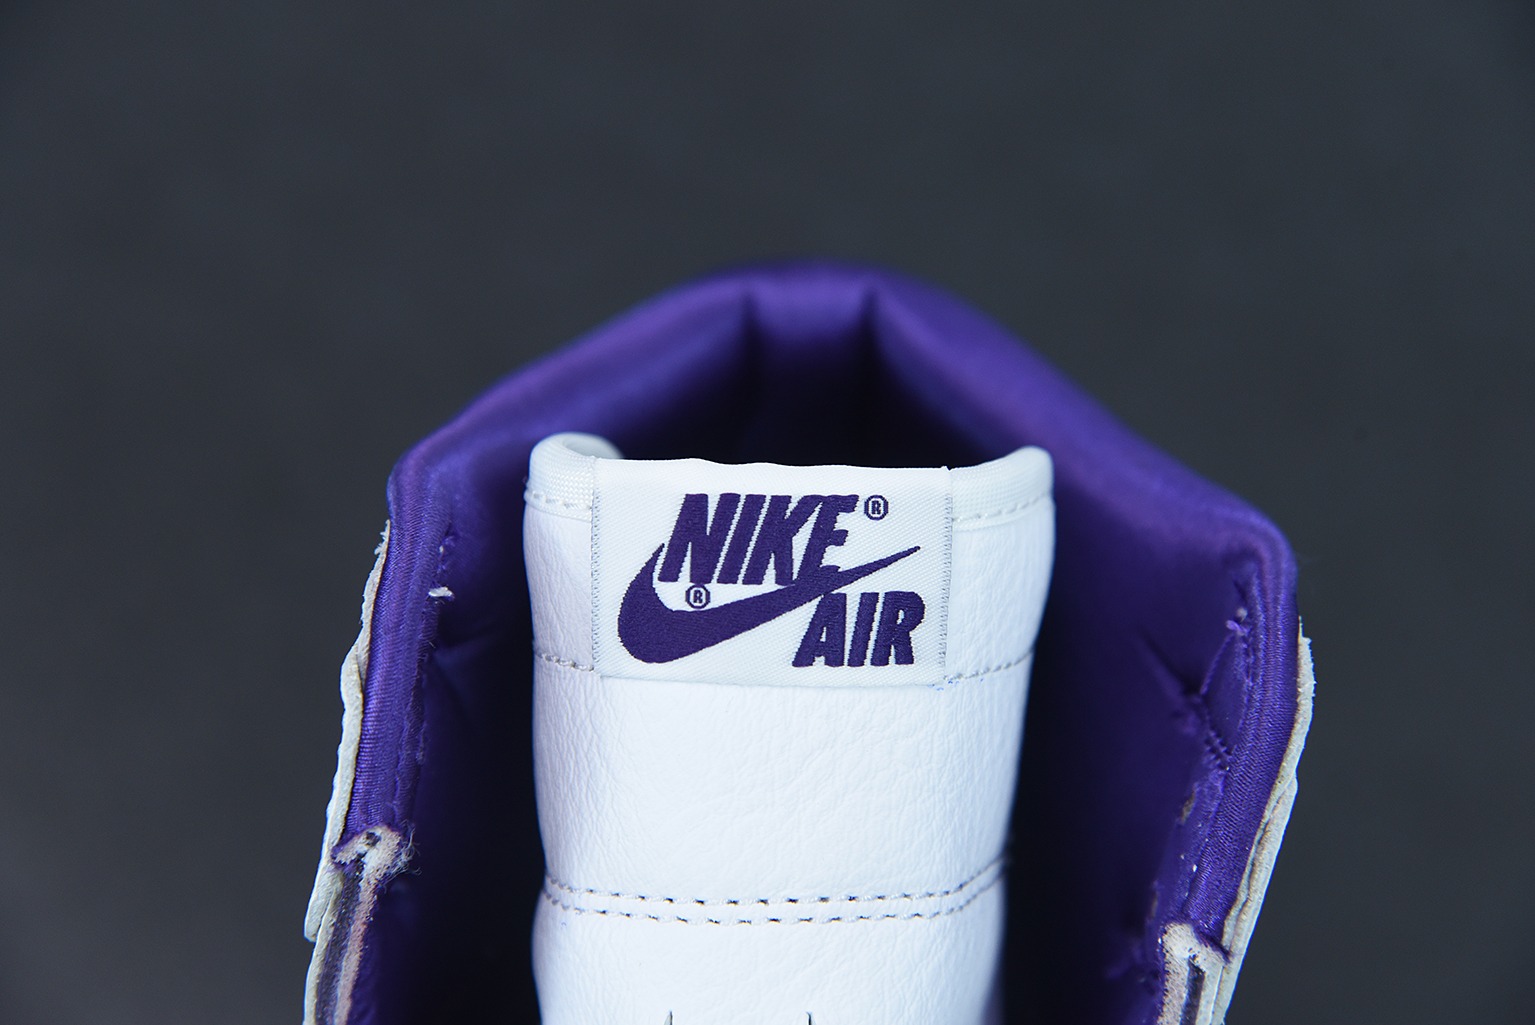 Air Jordan 1 Retro Hi OG  " Court Purple " AJ1乔1 白紫 高帮文化篮球鞋 CD0461-151